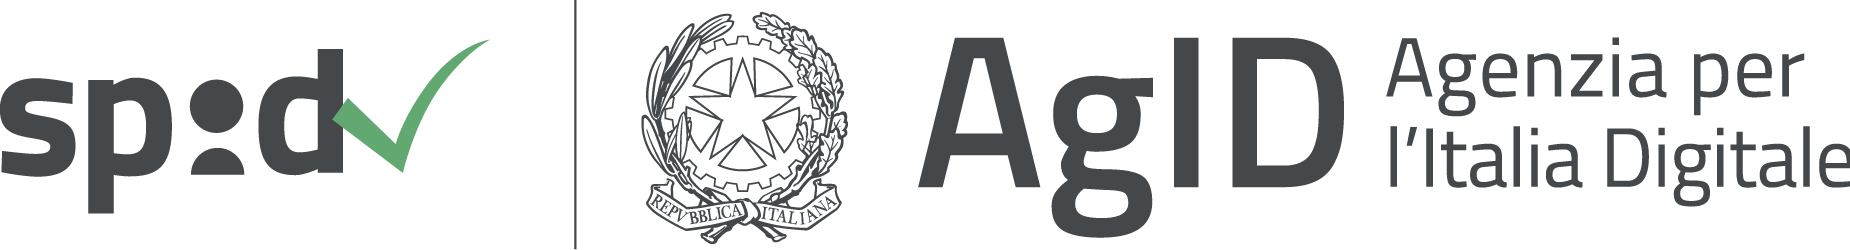 logo Spid-Agid